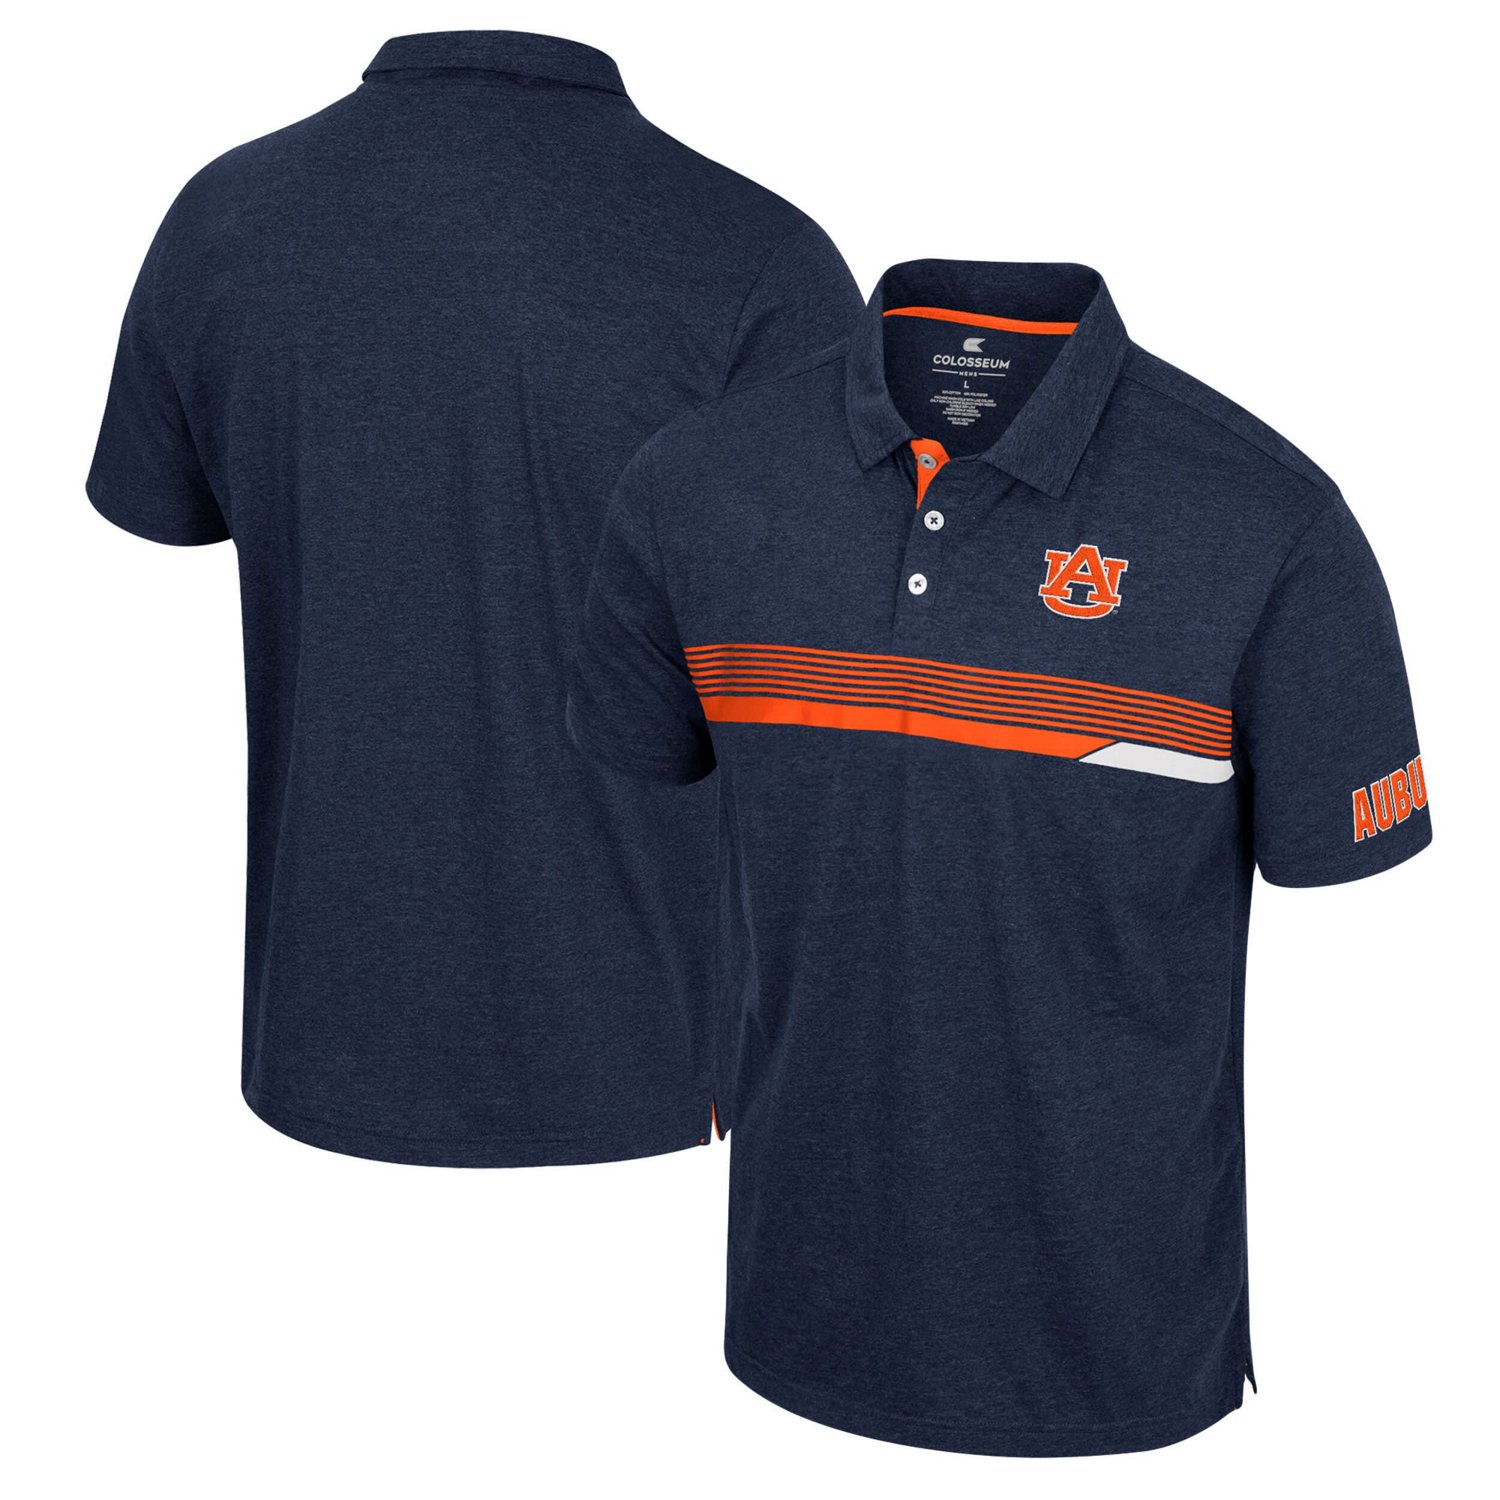 Auburn Shirts, Gear, & Apparel